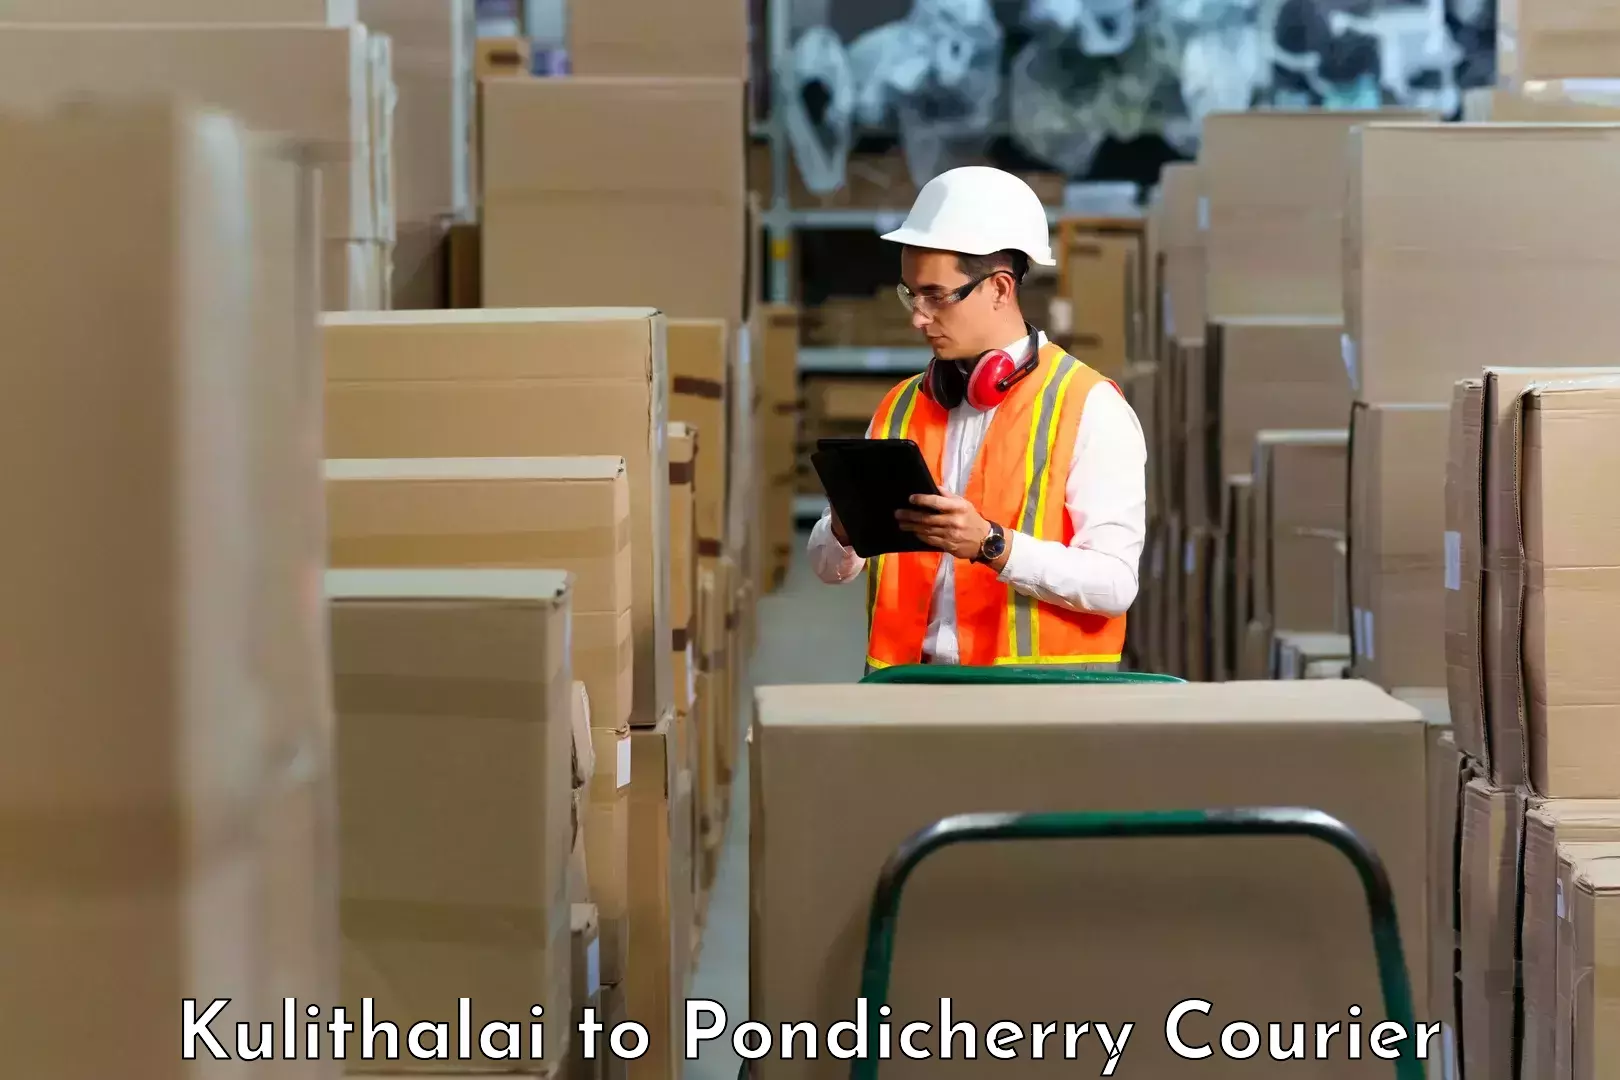 Courier service partnerships Kulithalai to Pondicherry